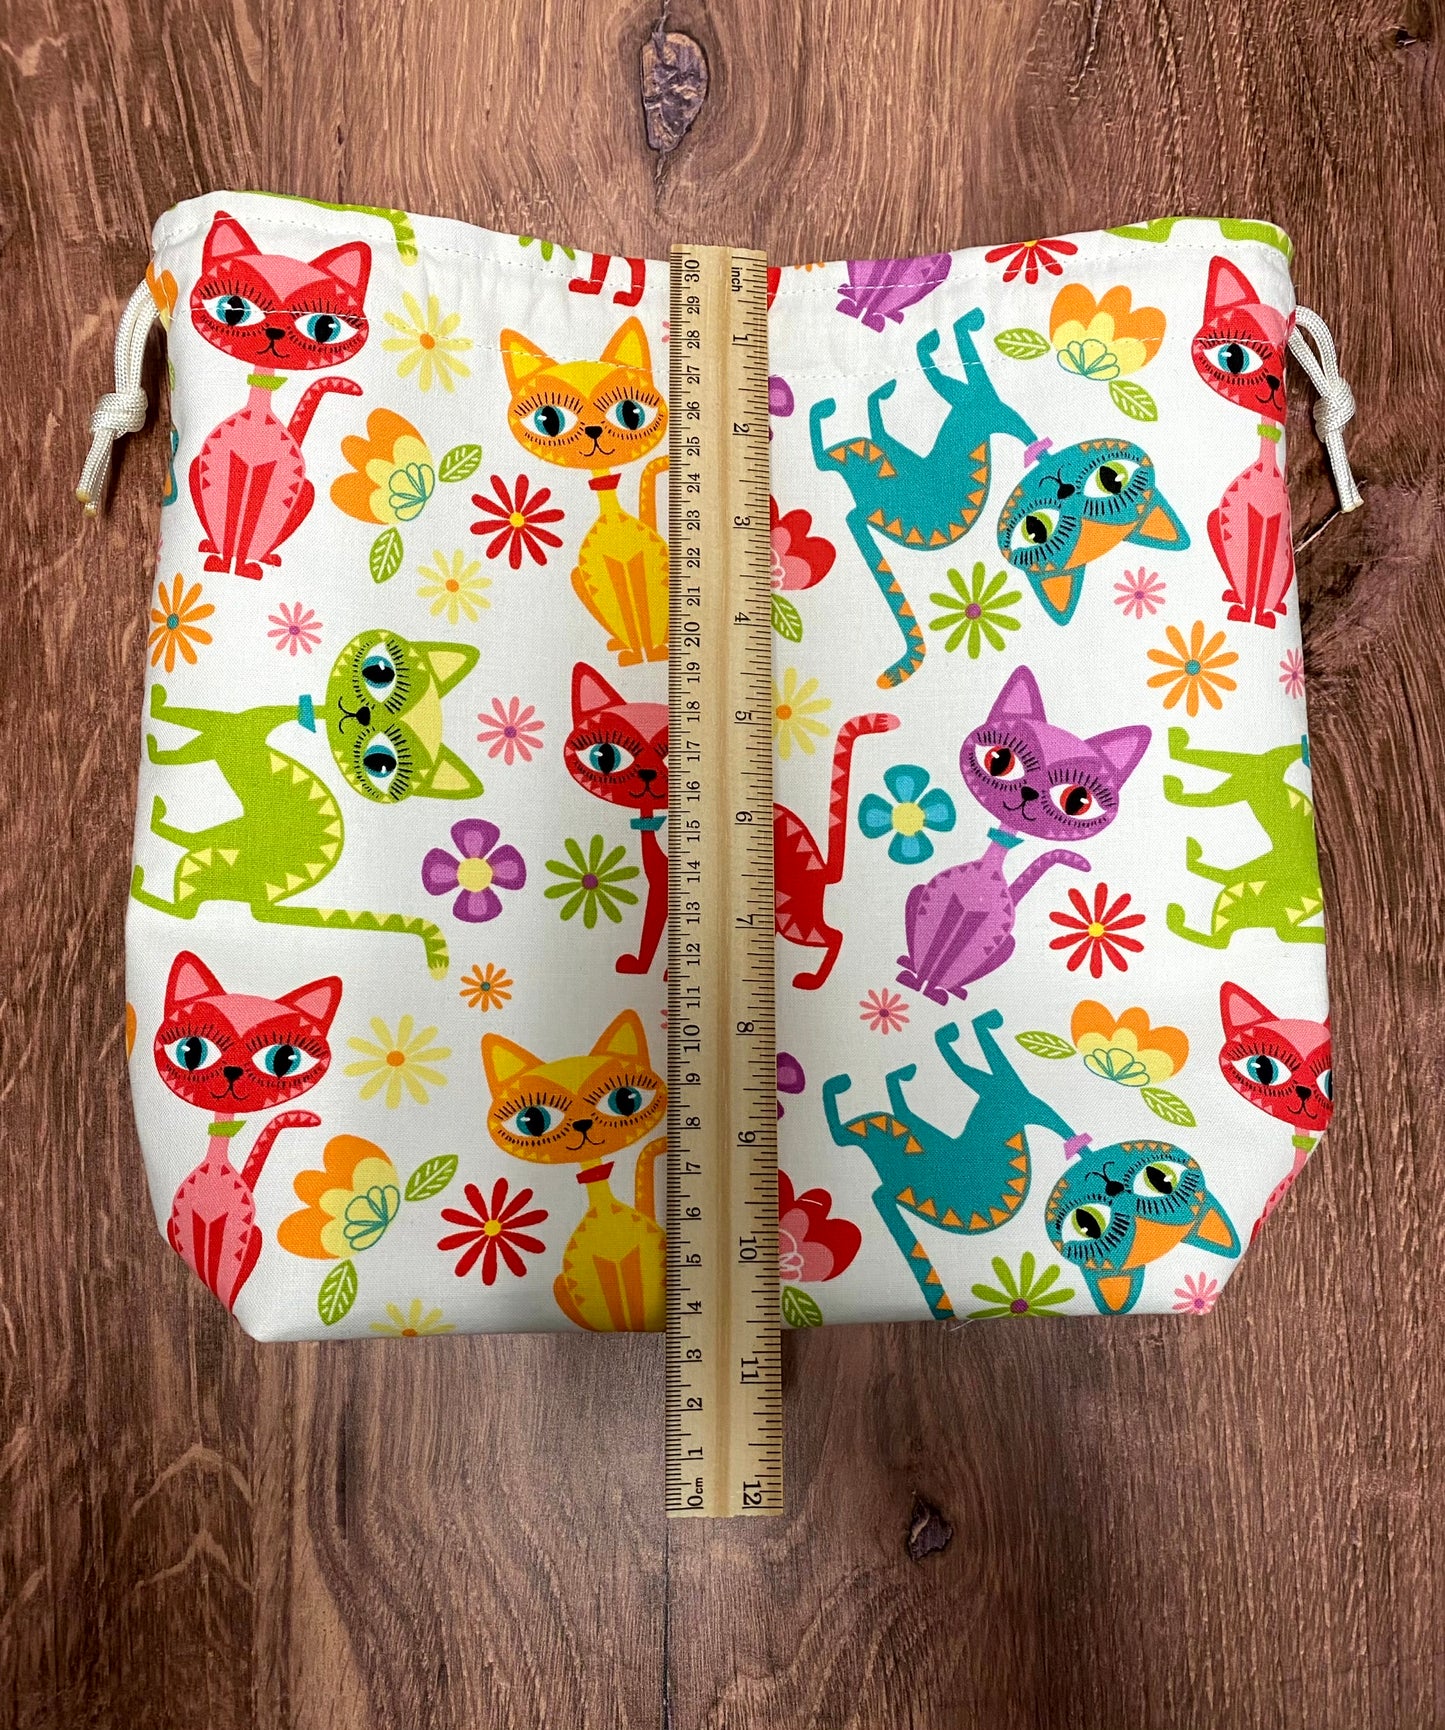 Cat Project Bag - Handmade - Drawstring Bag – Knitting Bag – Crochet Bag - Cross Stitch Bag - Toy Sack - Bingo Bag - Kitty - Kitten